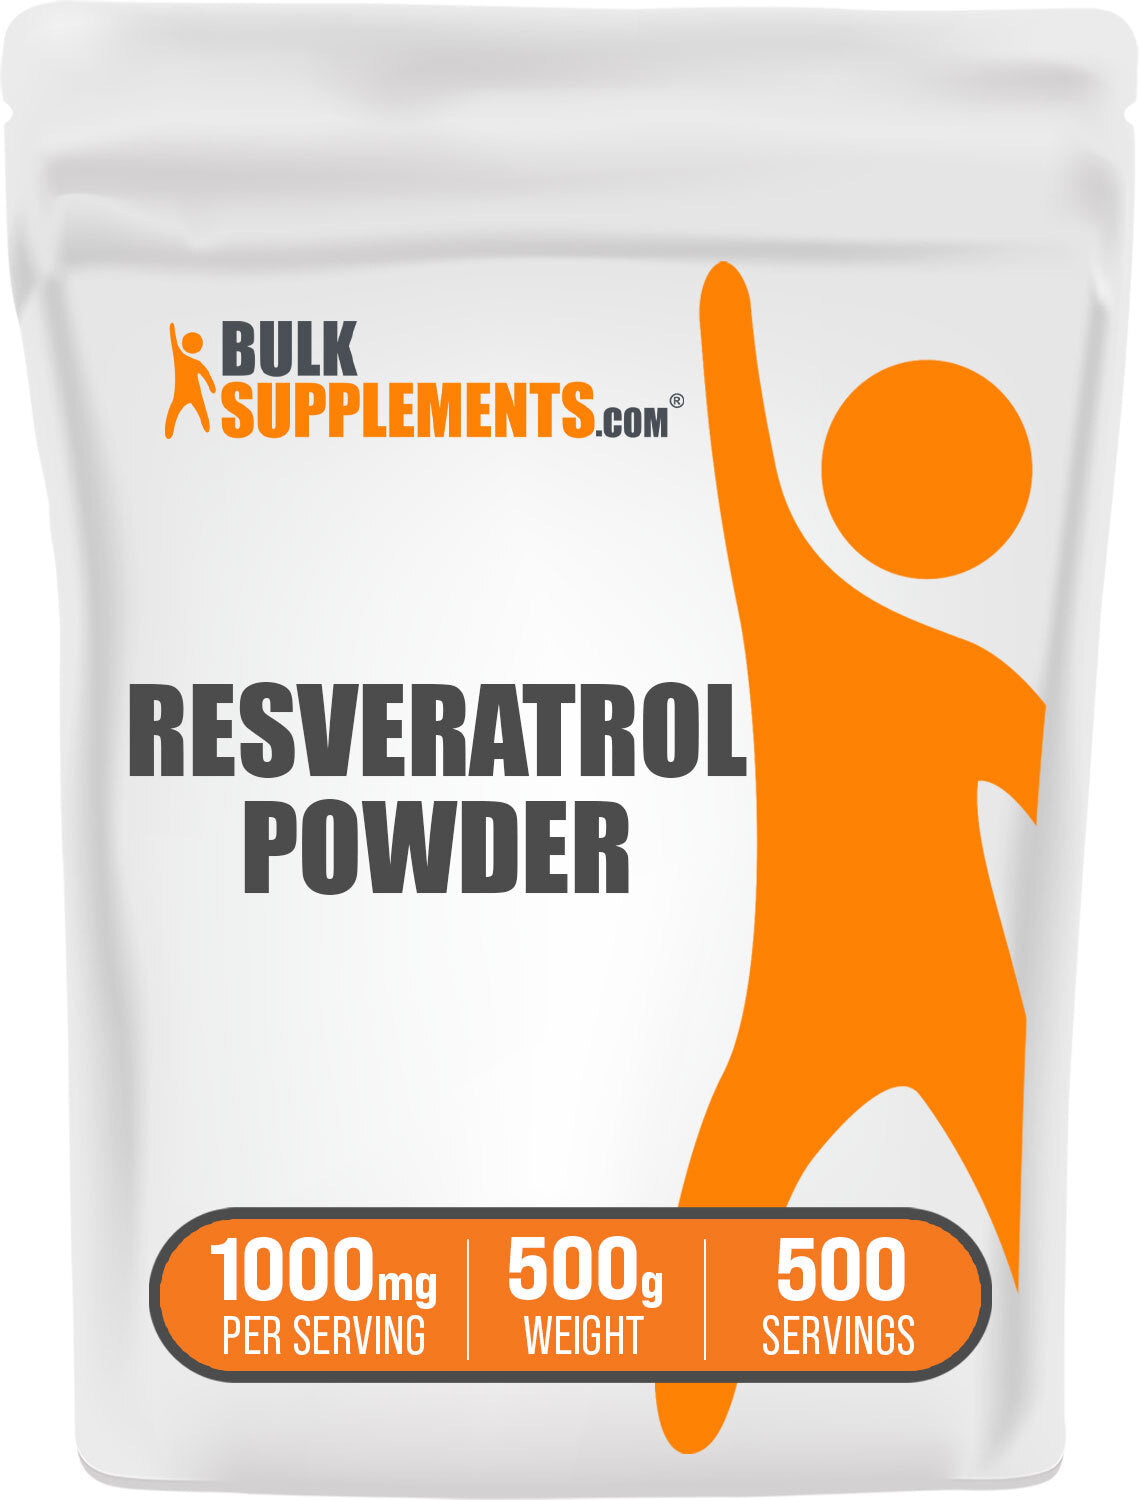 BulkSupplements Resveratrol Powder 500g bag